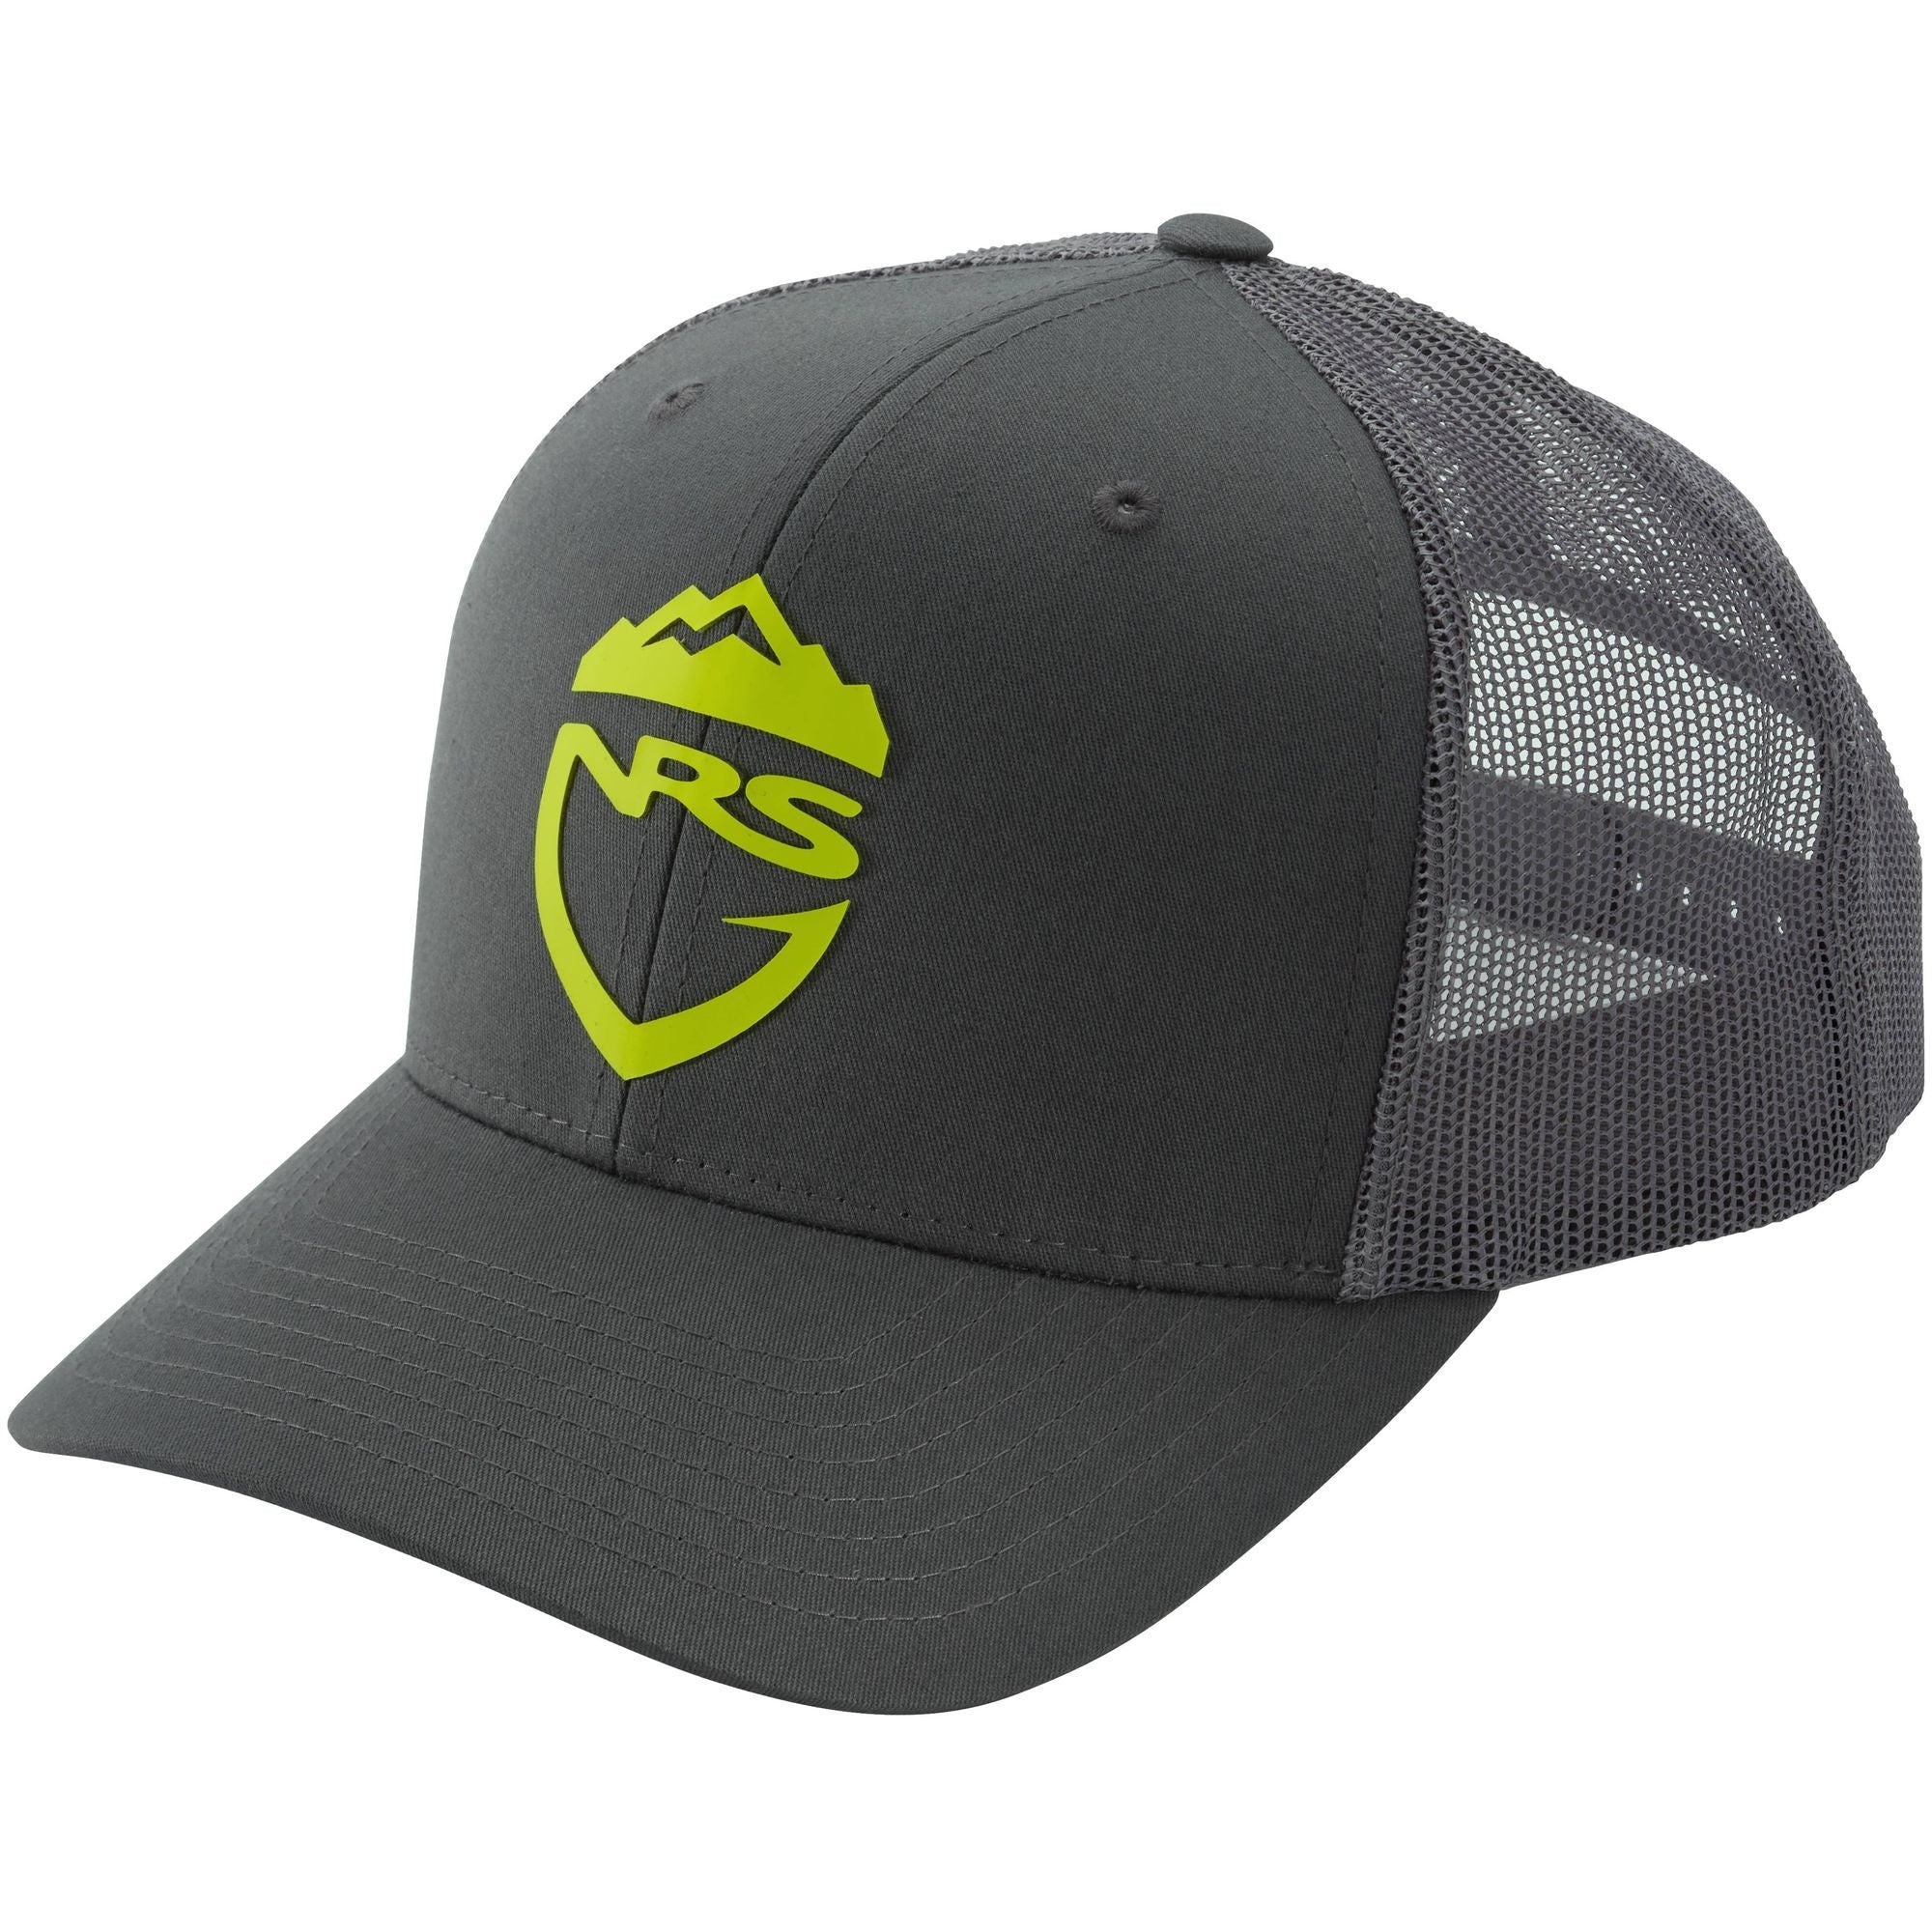 NRS - Fishing Trucker Hat, Black/Black